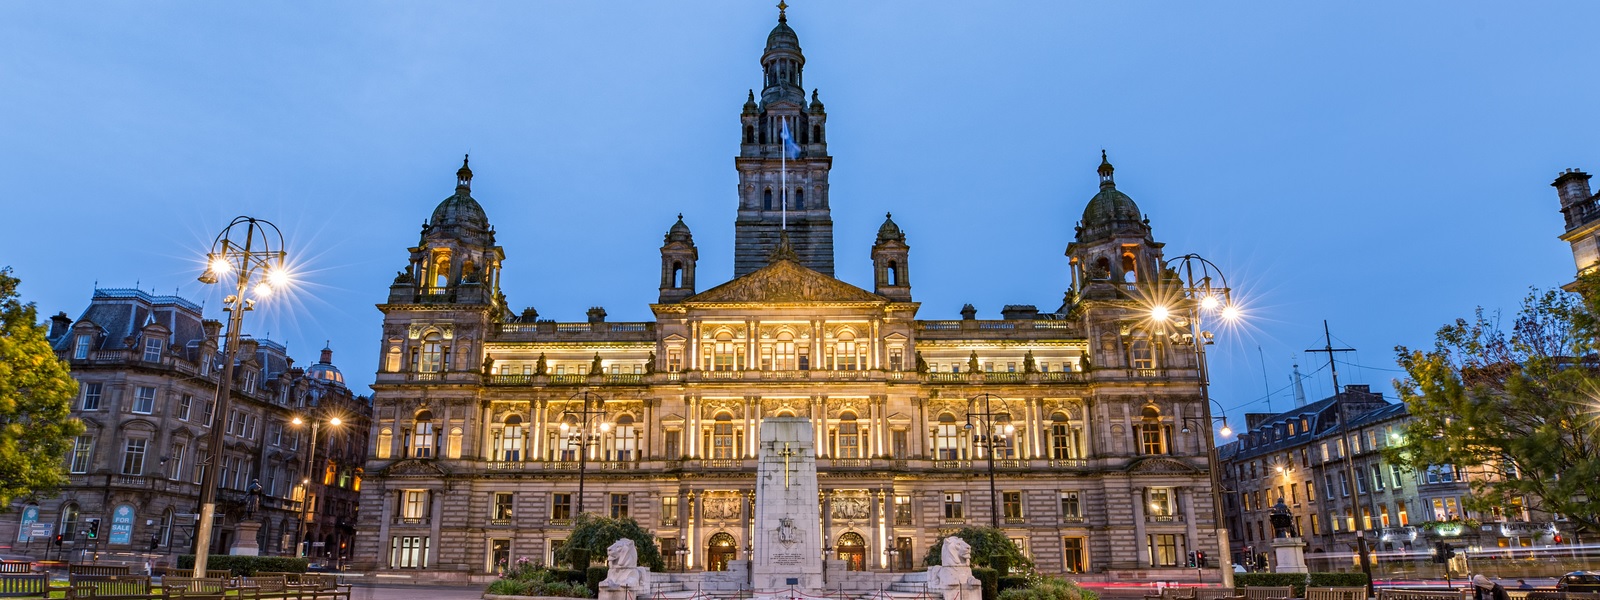 Glasgow City Chambers at night